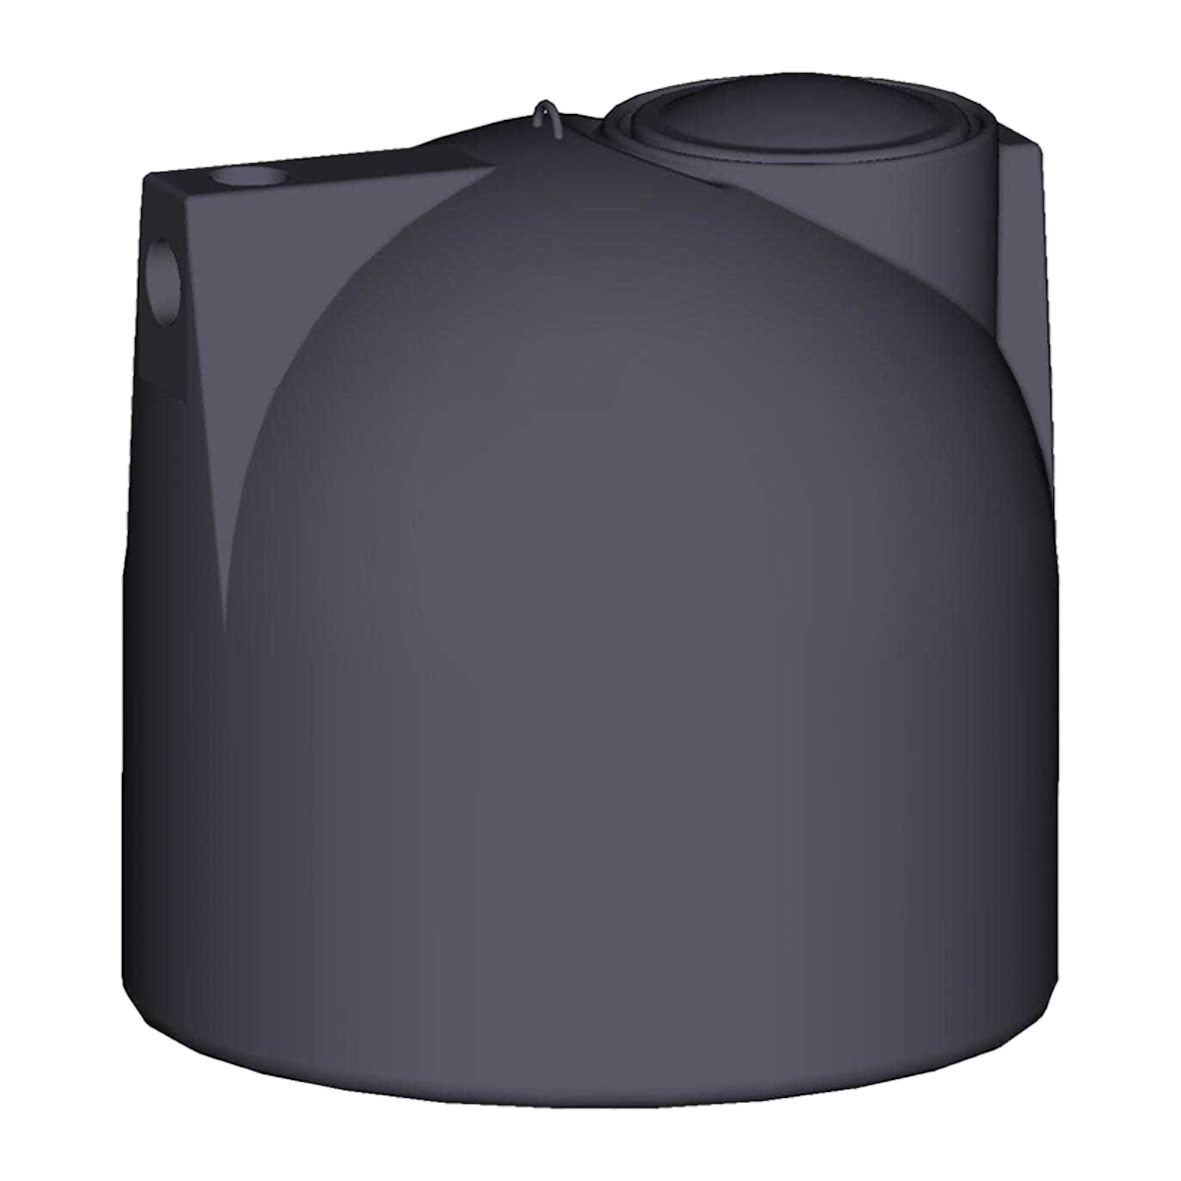 [6015] Septic tank - black water - 1000 to 2000 liters - Main image